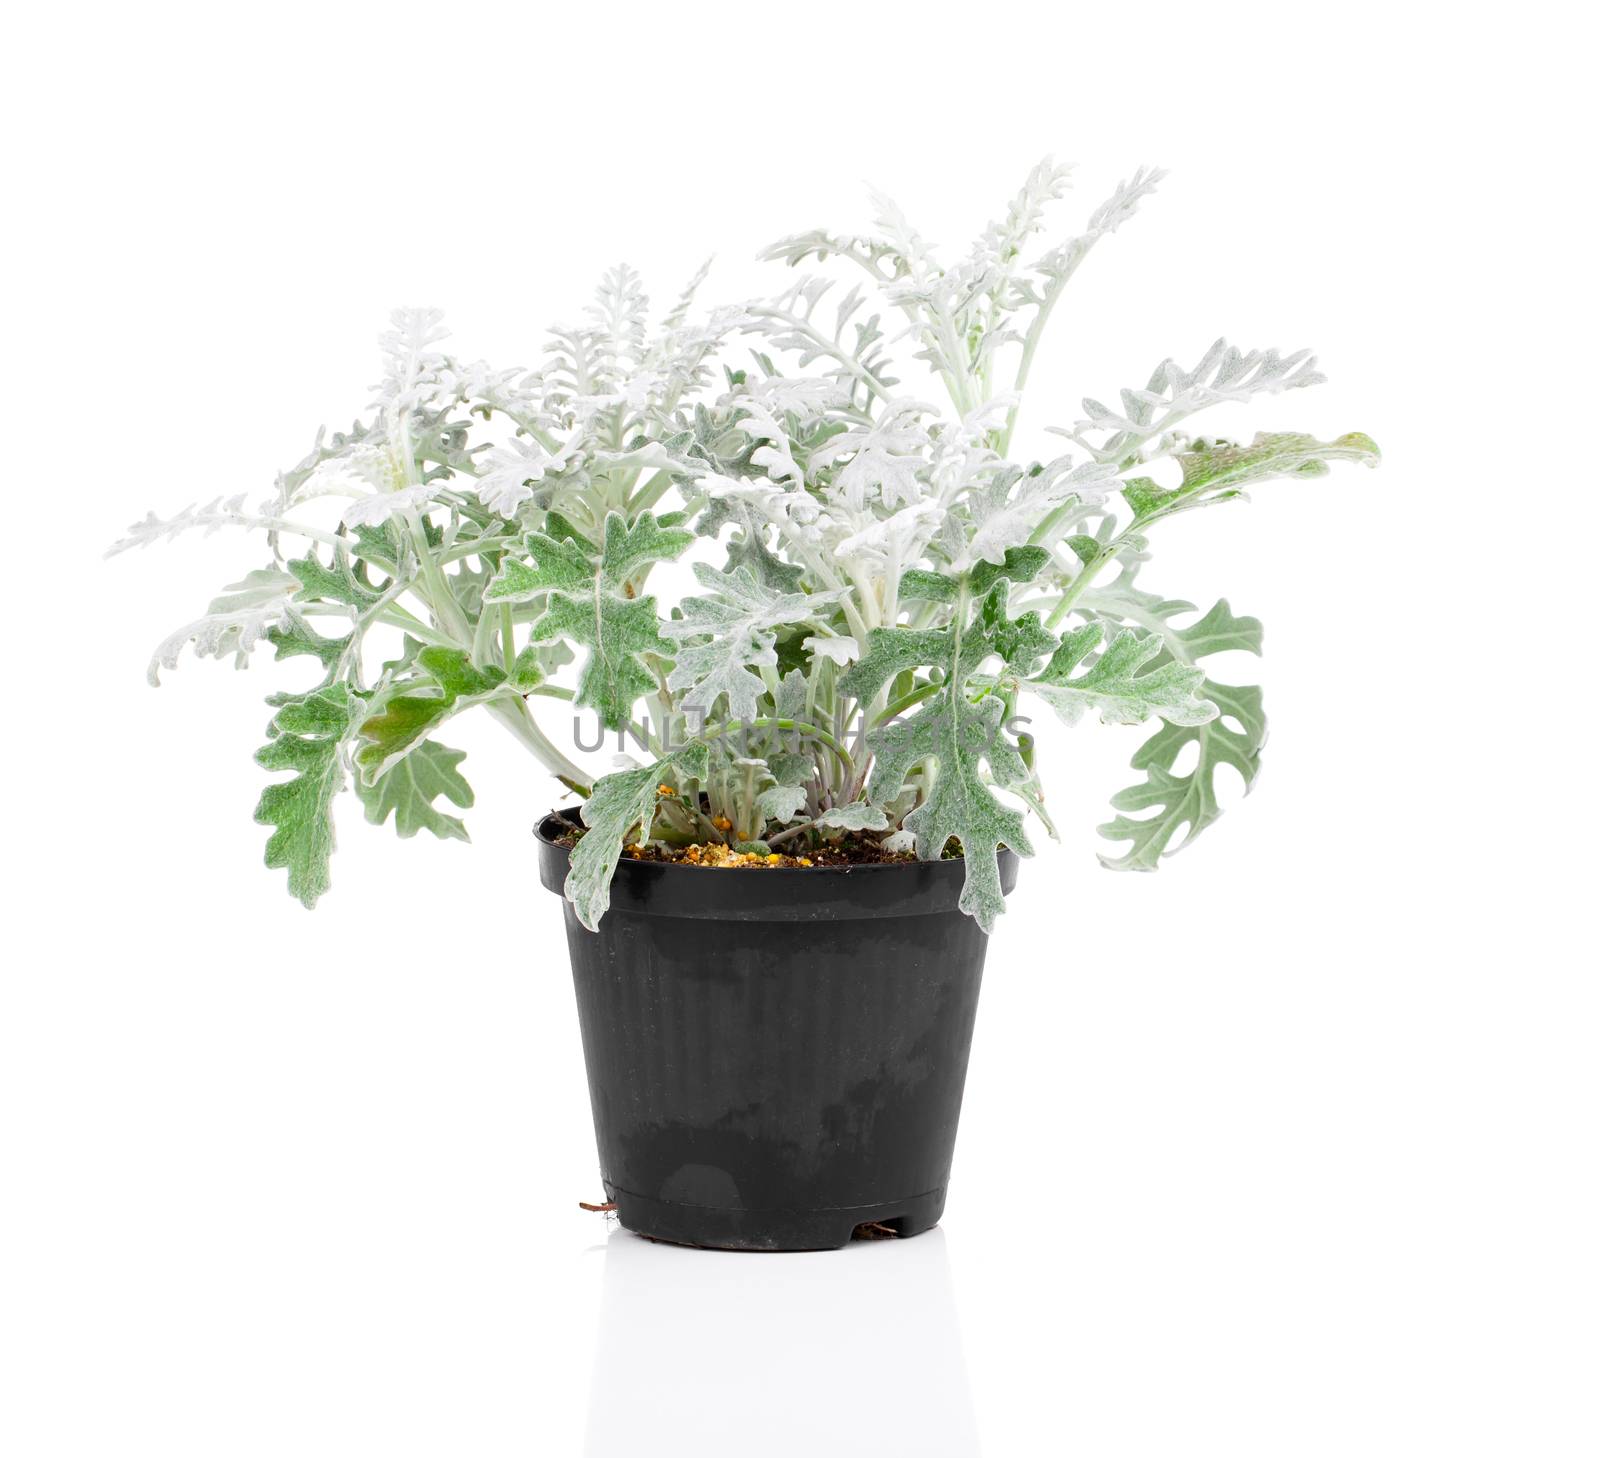 Jacobaea maritima or silver ragwort plant